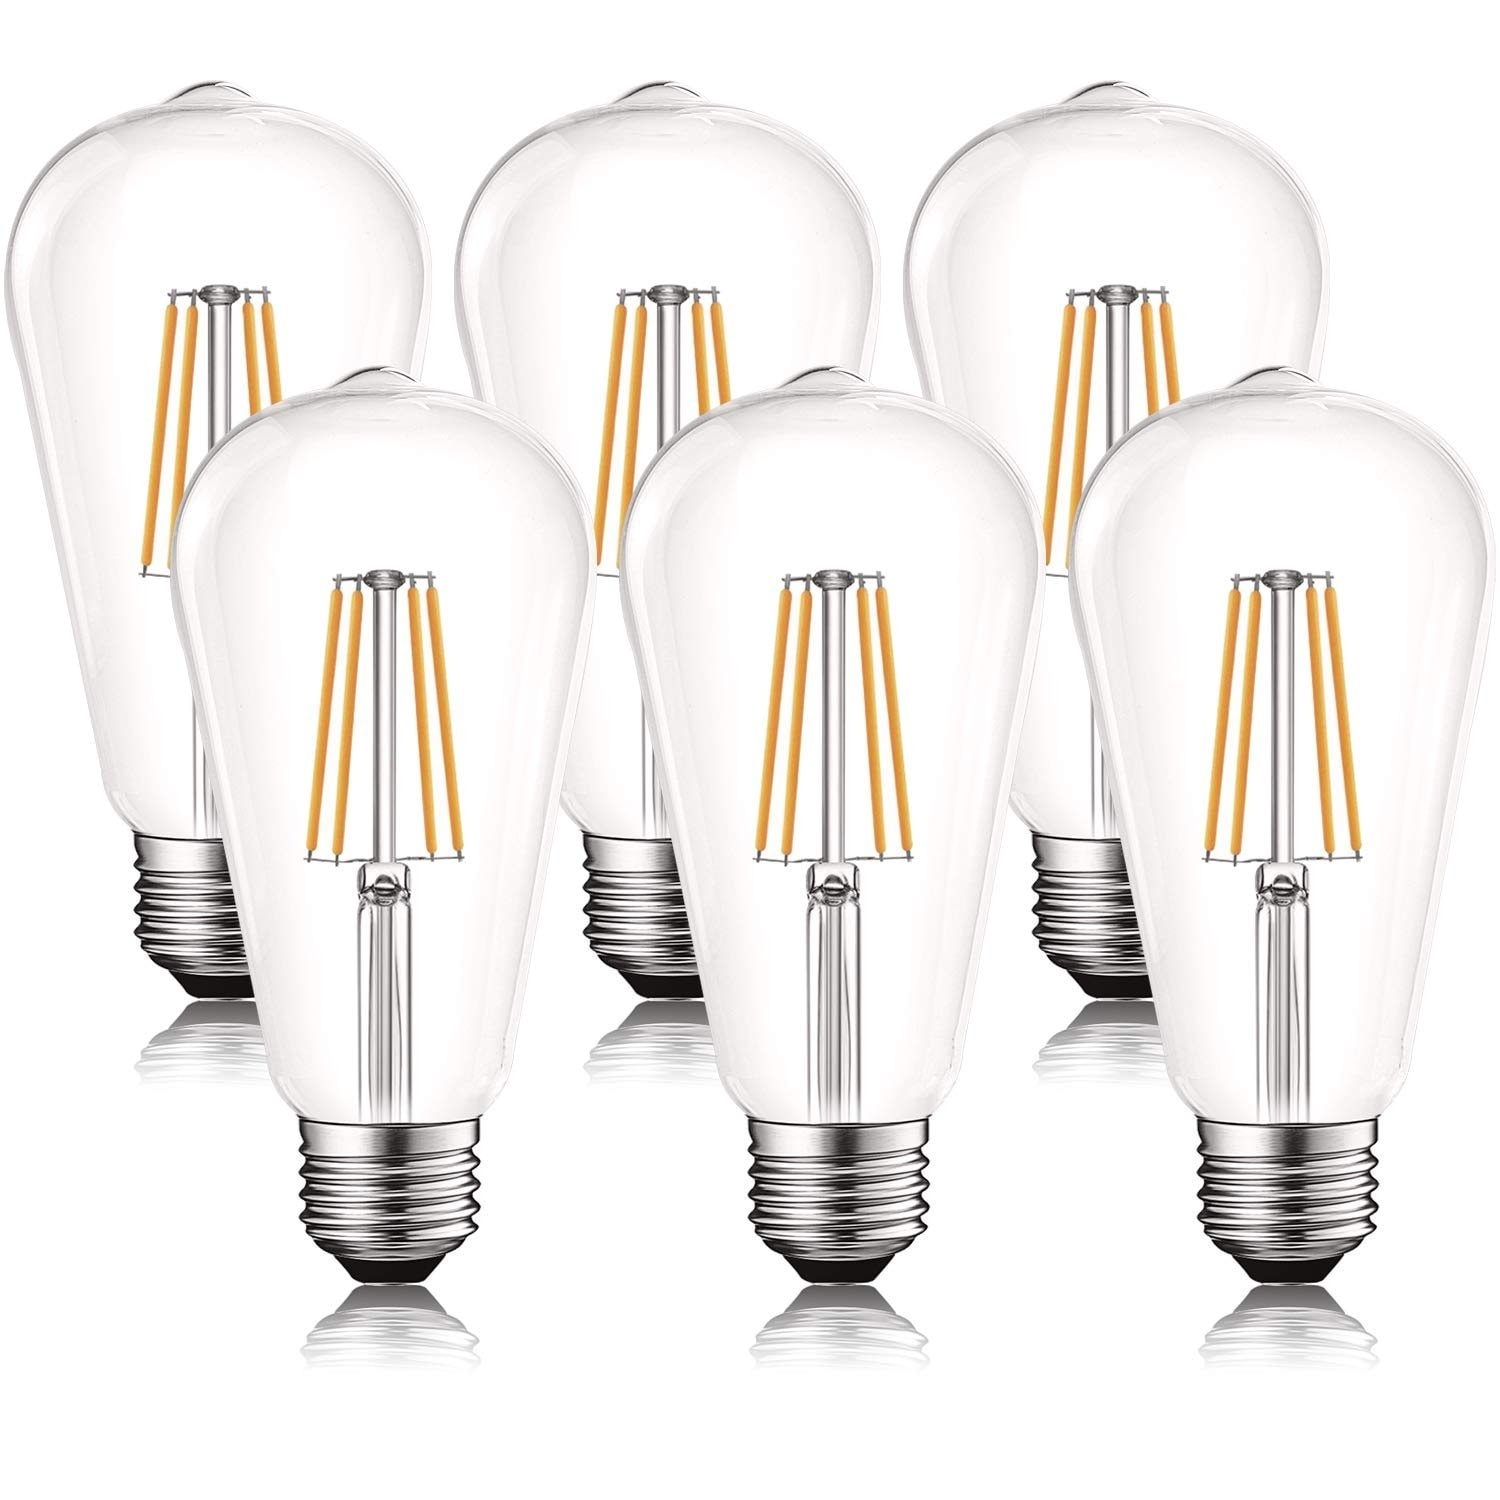 12Pack Vintage LED Edison Light Bulb Equivalent 60 Watt 6W ST58 Warm White E26 